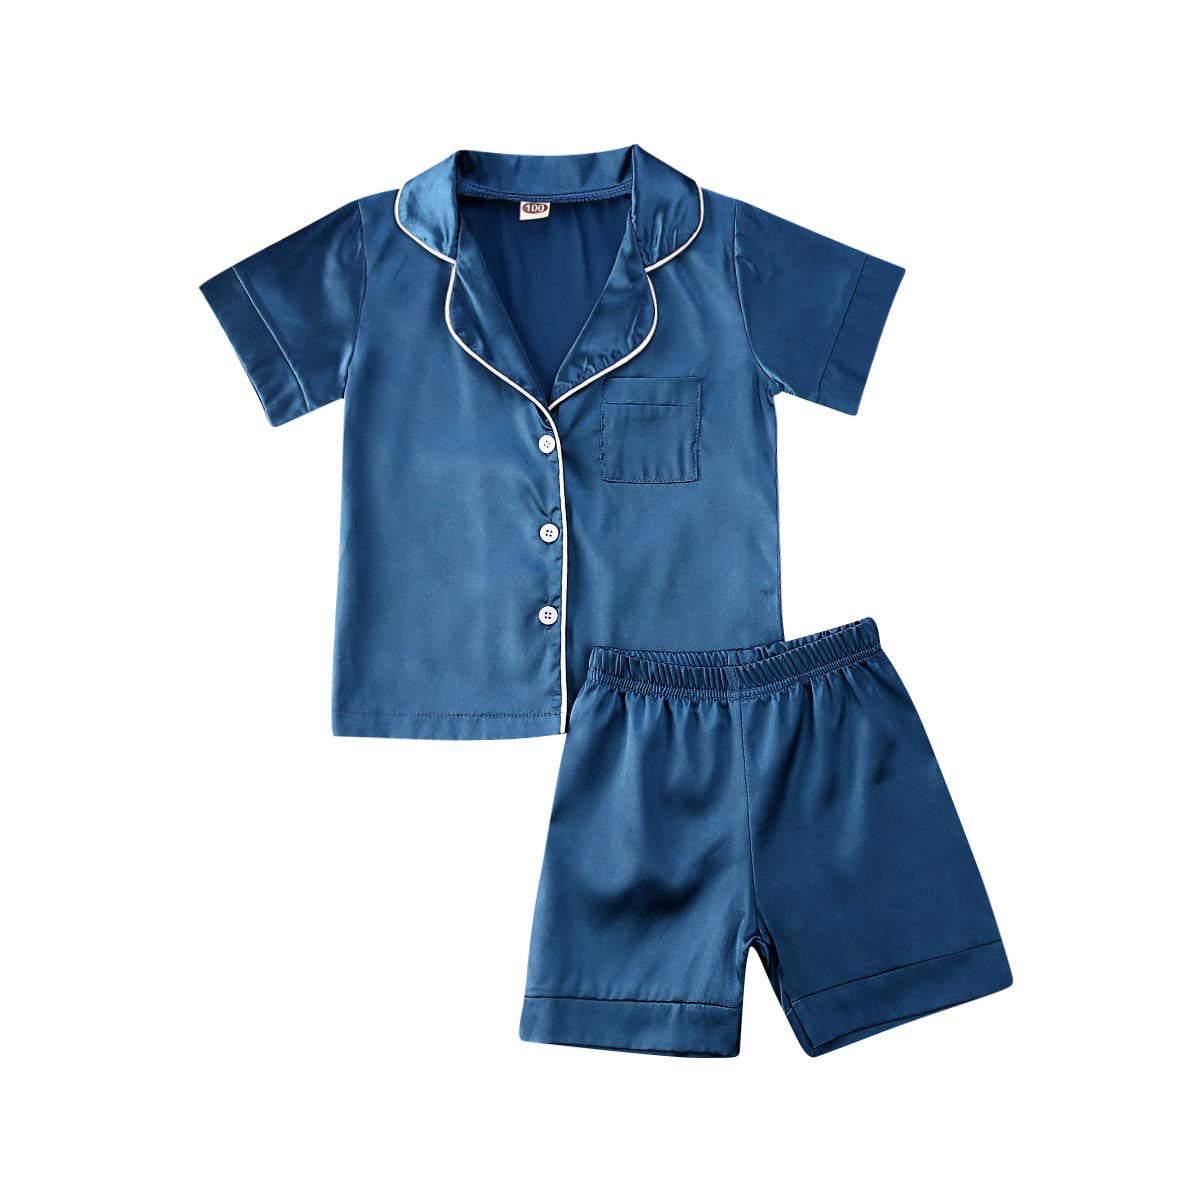 TiaoBug Kids Baby Boy Long Sleeves Tops with Pants Pyjamas Set Fancy Dress Cowboy Costume Outfit 